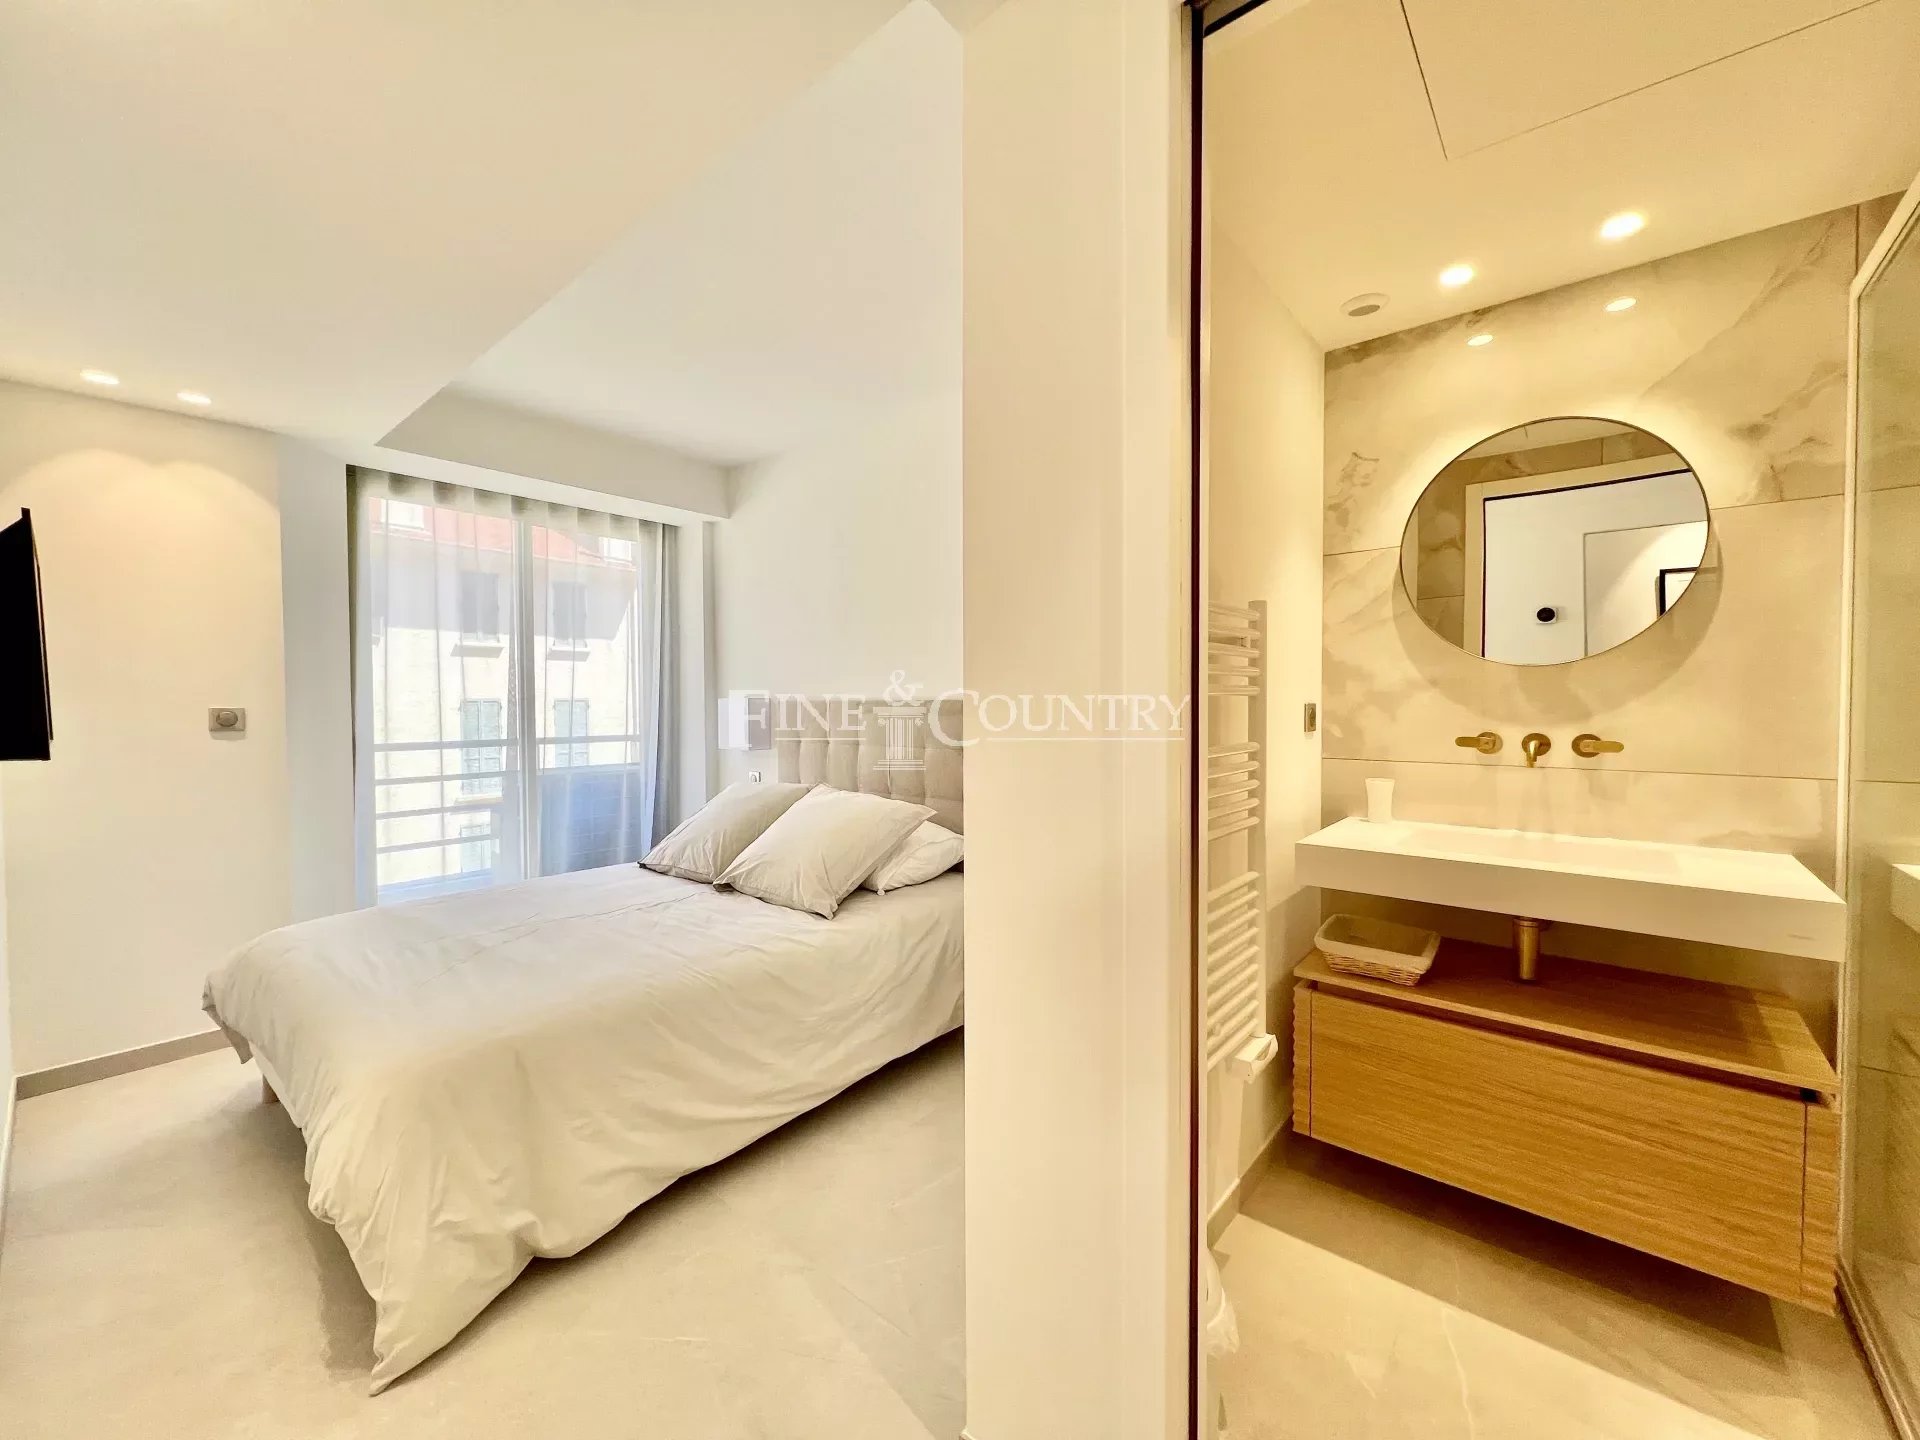 Luxury Croisette Apartment for sale on the Croisette, Cannes